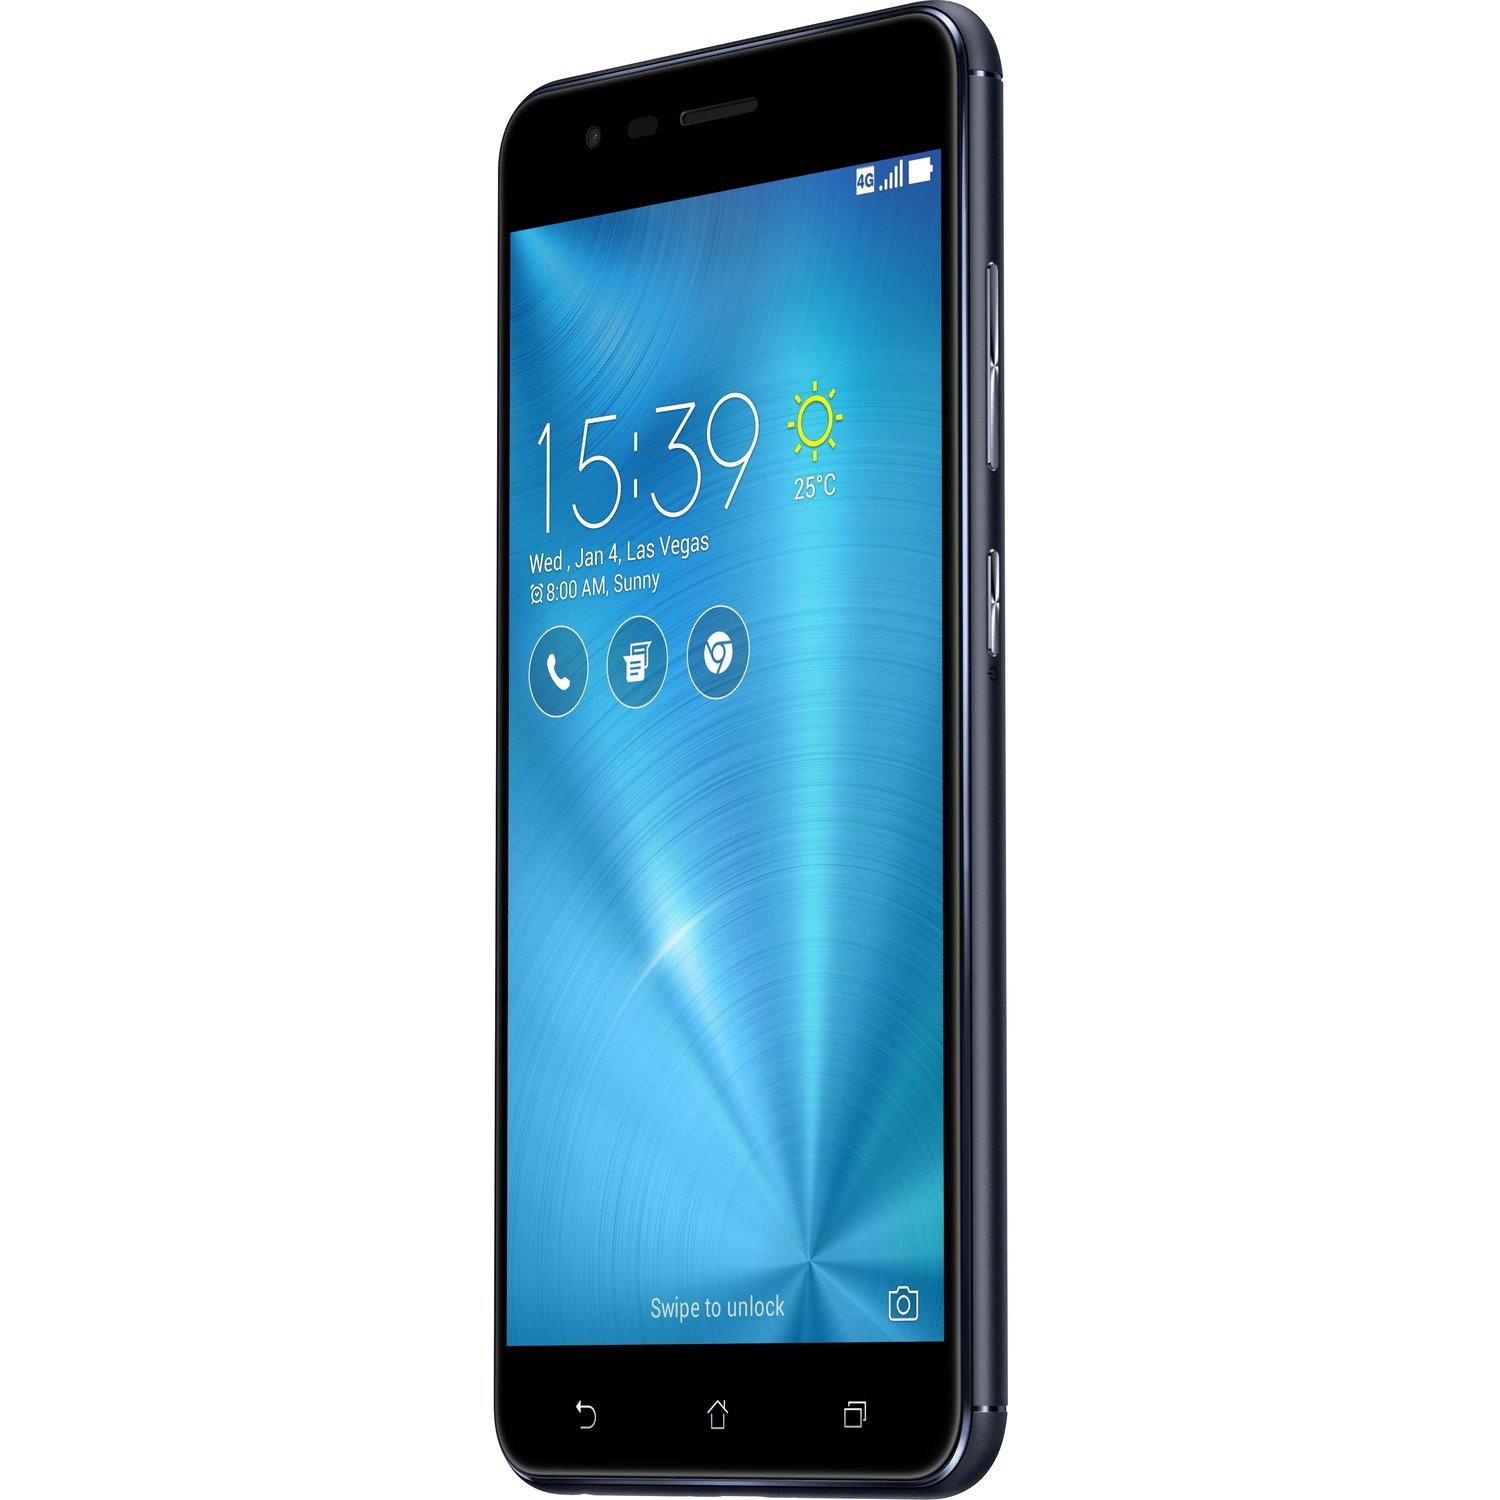 Asus ZenFone 3 Zoom ZE553KL 32 GB Smartphone - 5.5" AMOLED Full HD 1920 x 1080 - 3 GB RAM - Android 6.0.1 Marshmallow - 4G - Navy Black